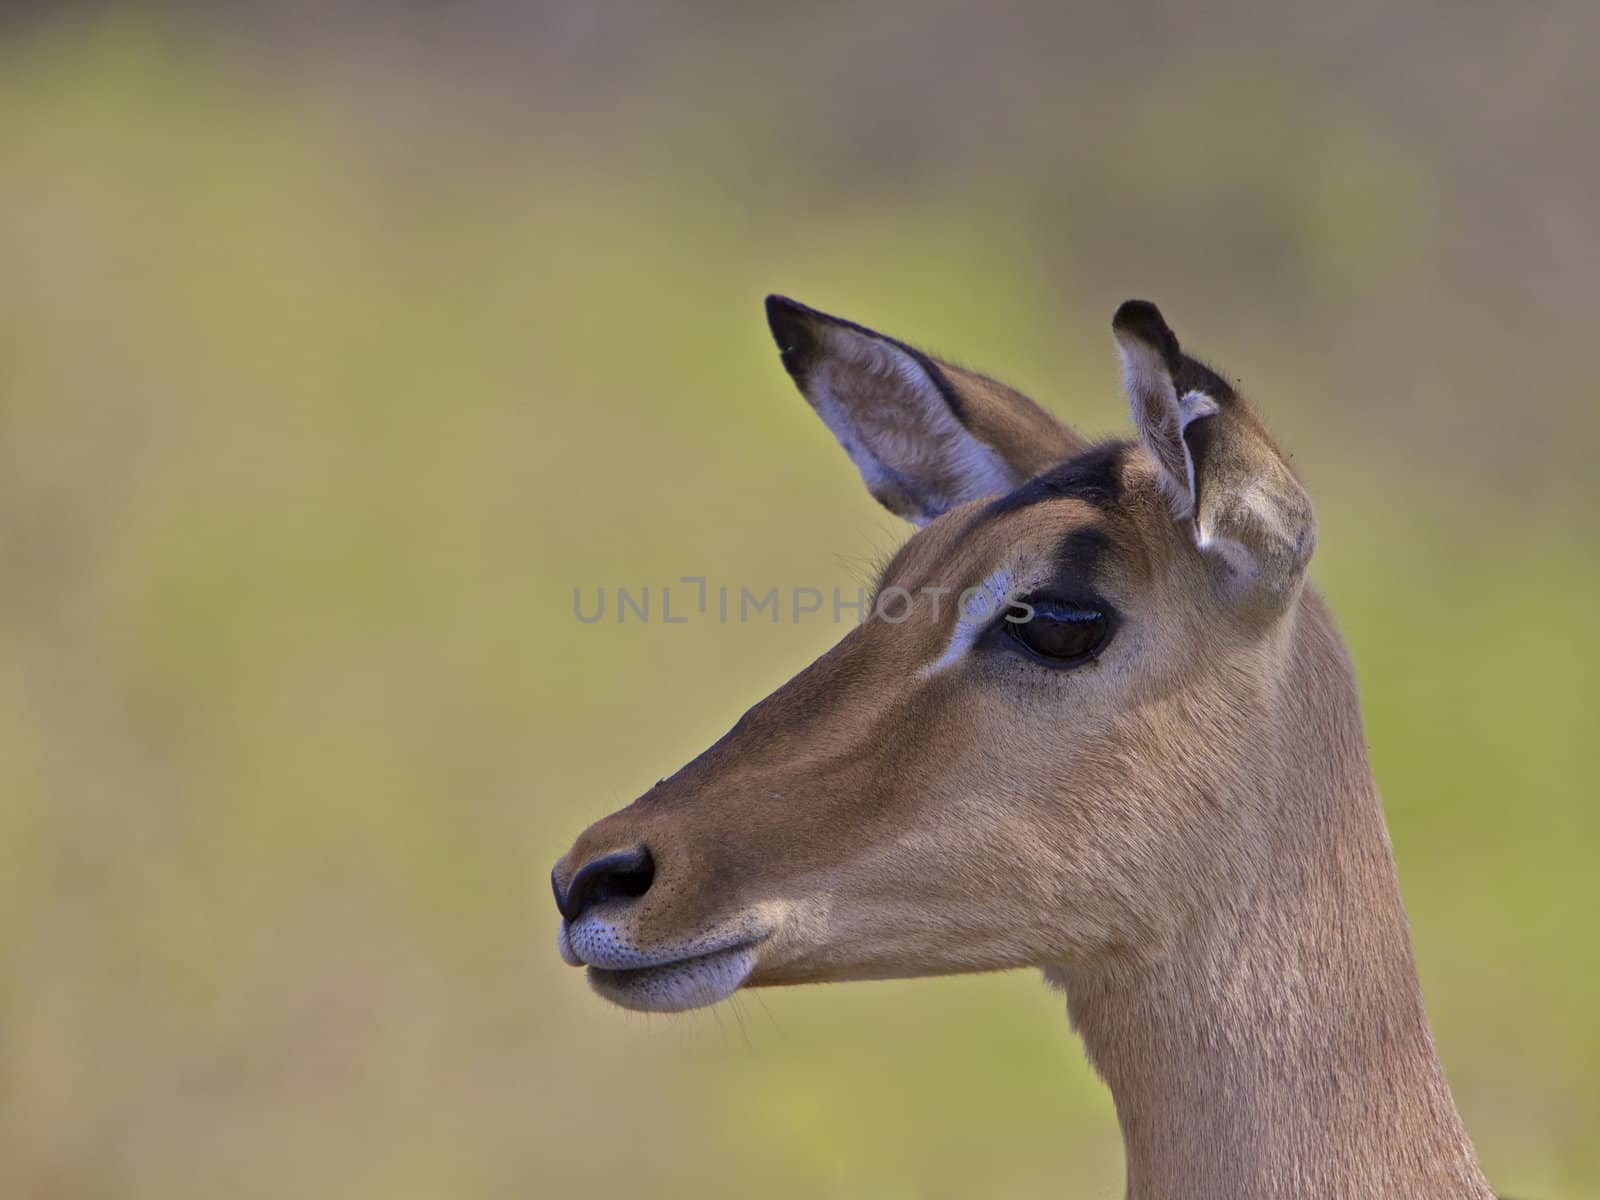 Impala, South Africa by instinia